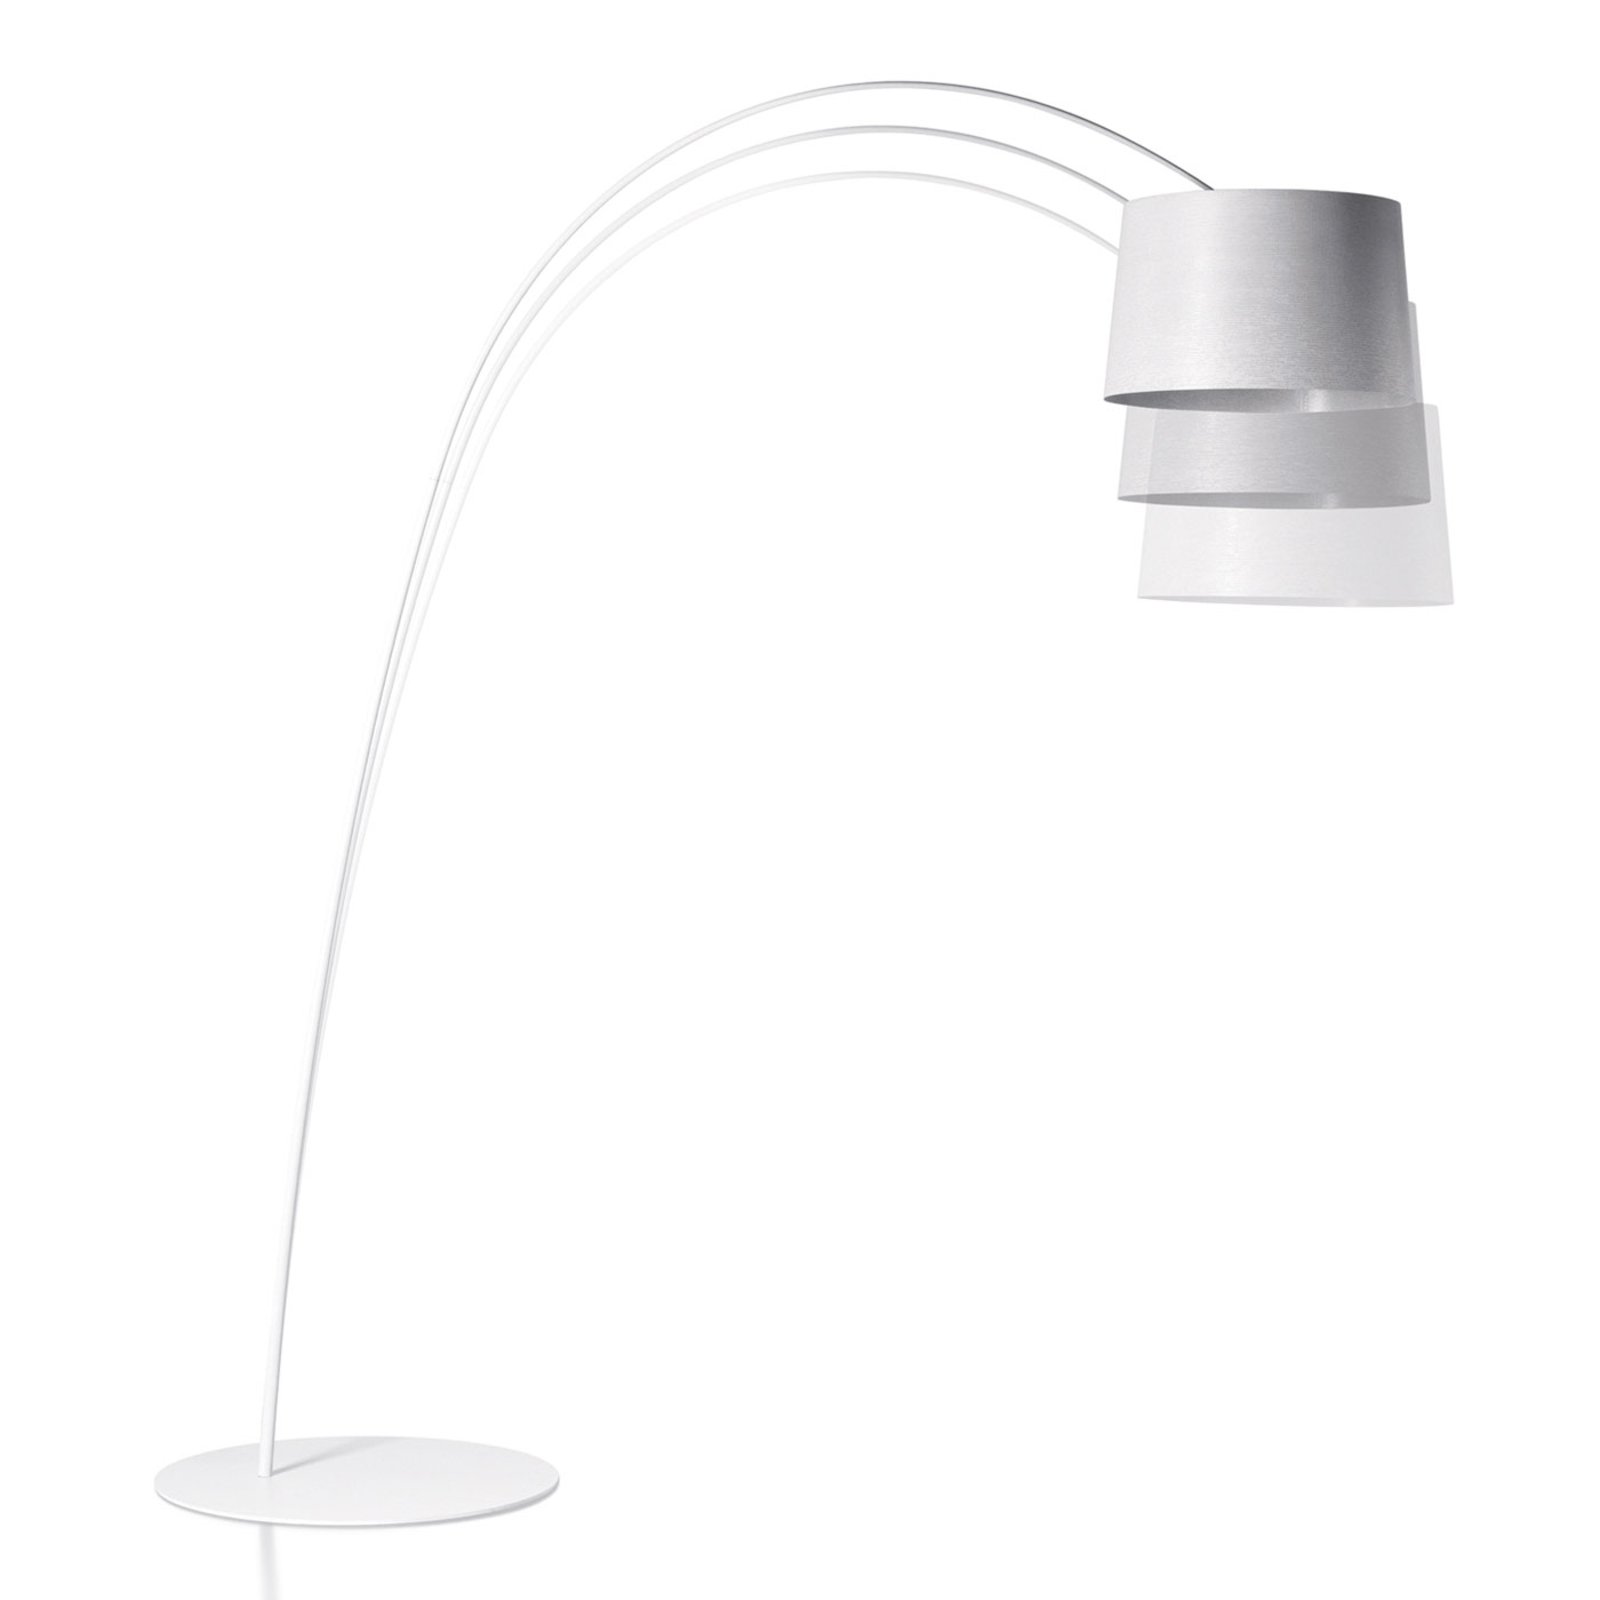 Foscarini Twiggy arc lamp with dimmer, white